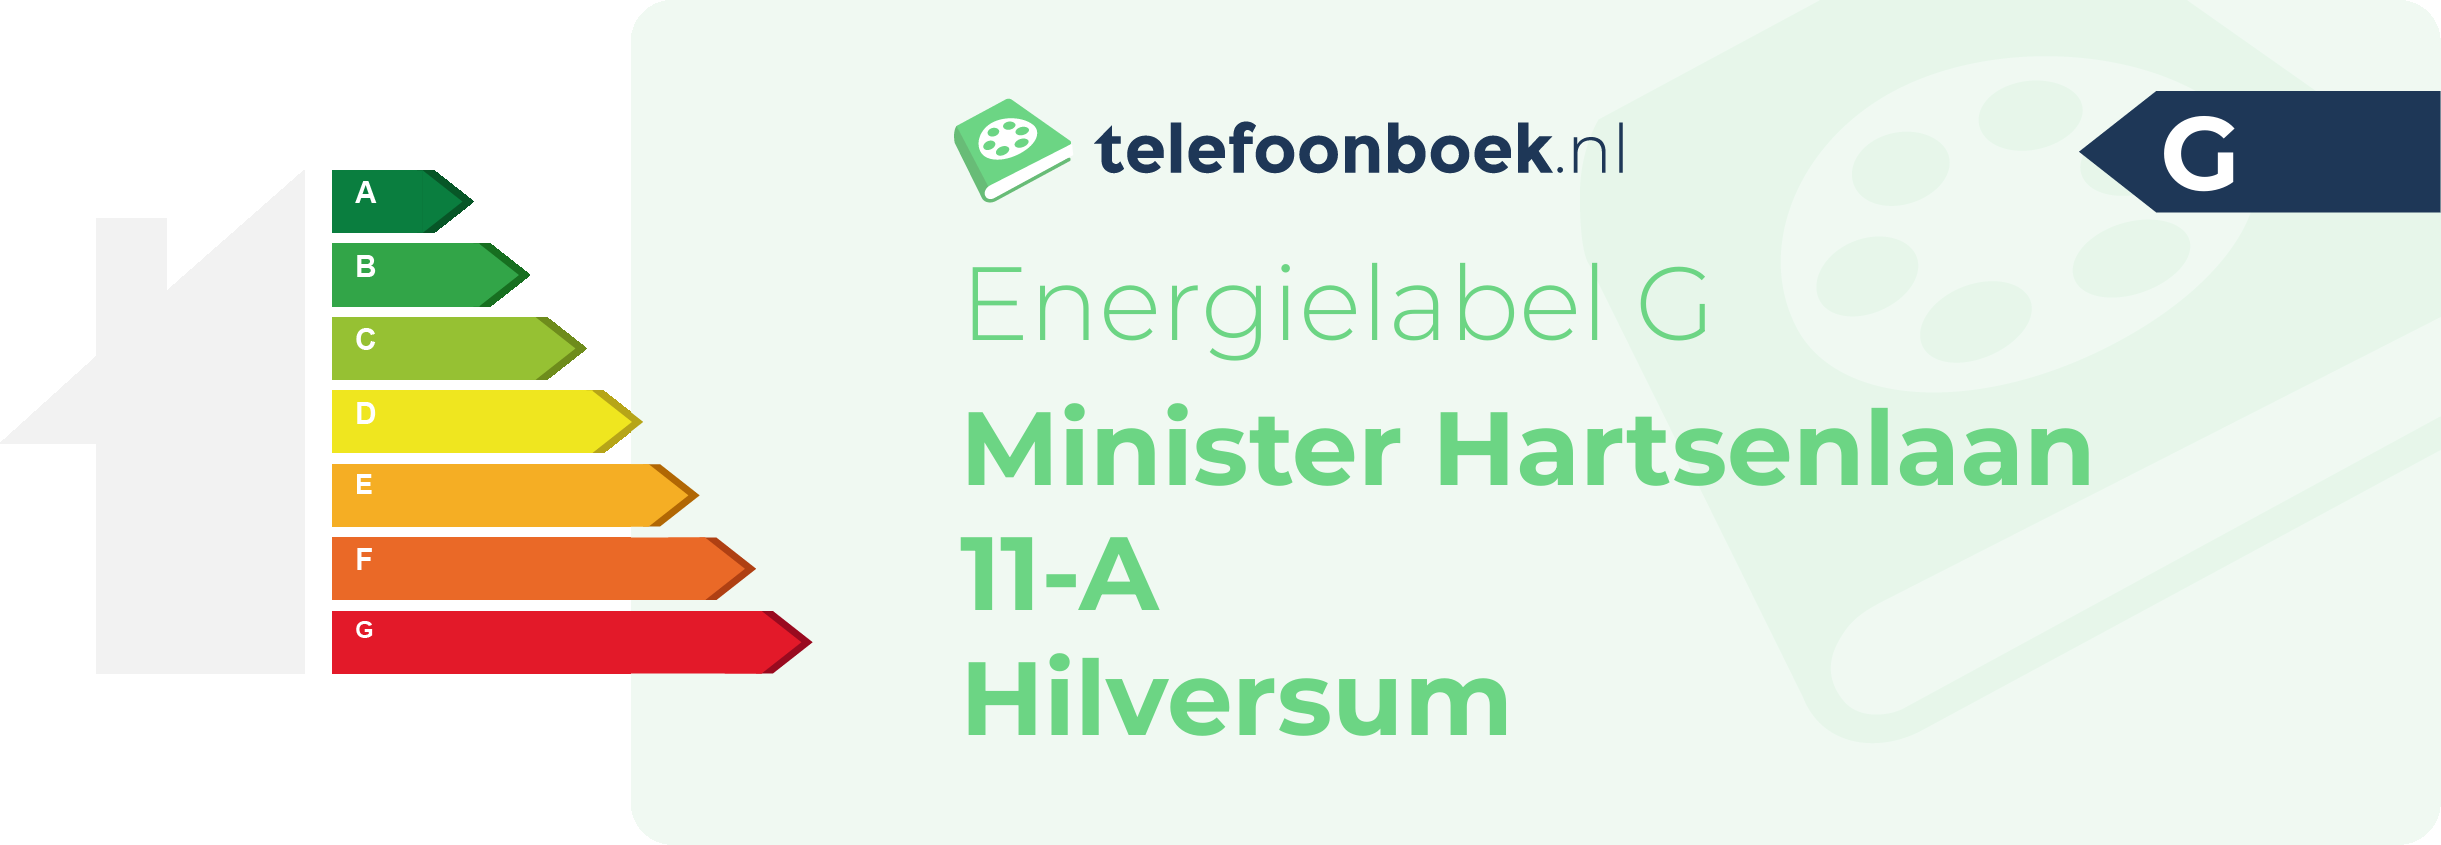 Energielabel Minister Hartsenlaan 11-A Hilversum